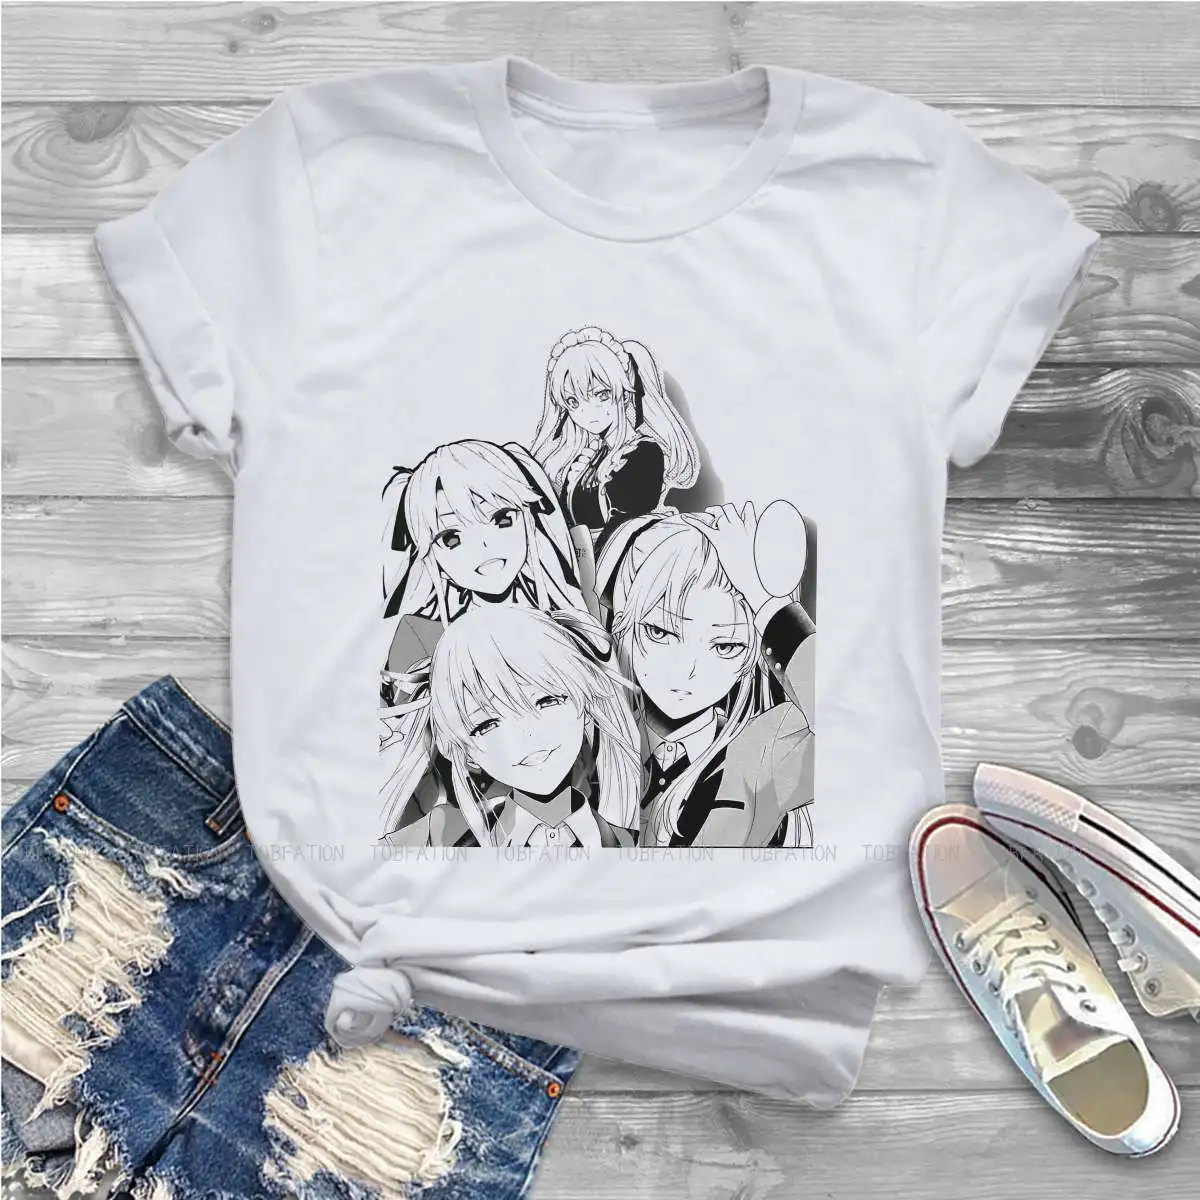 

Mary Women Tshirts Kakegurui Hentai Cosply Manga Gothic Vintage Female Clothing Oversized Cotton Graphic Tops